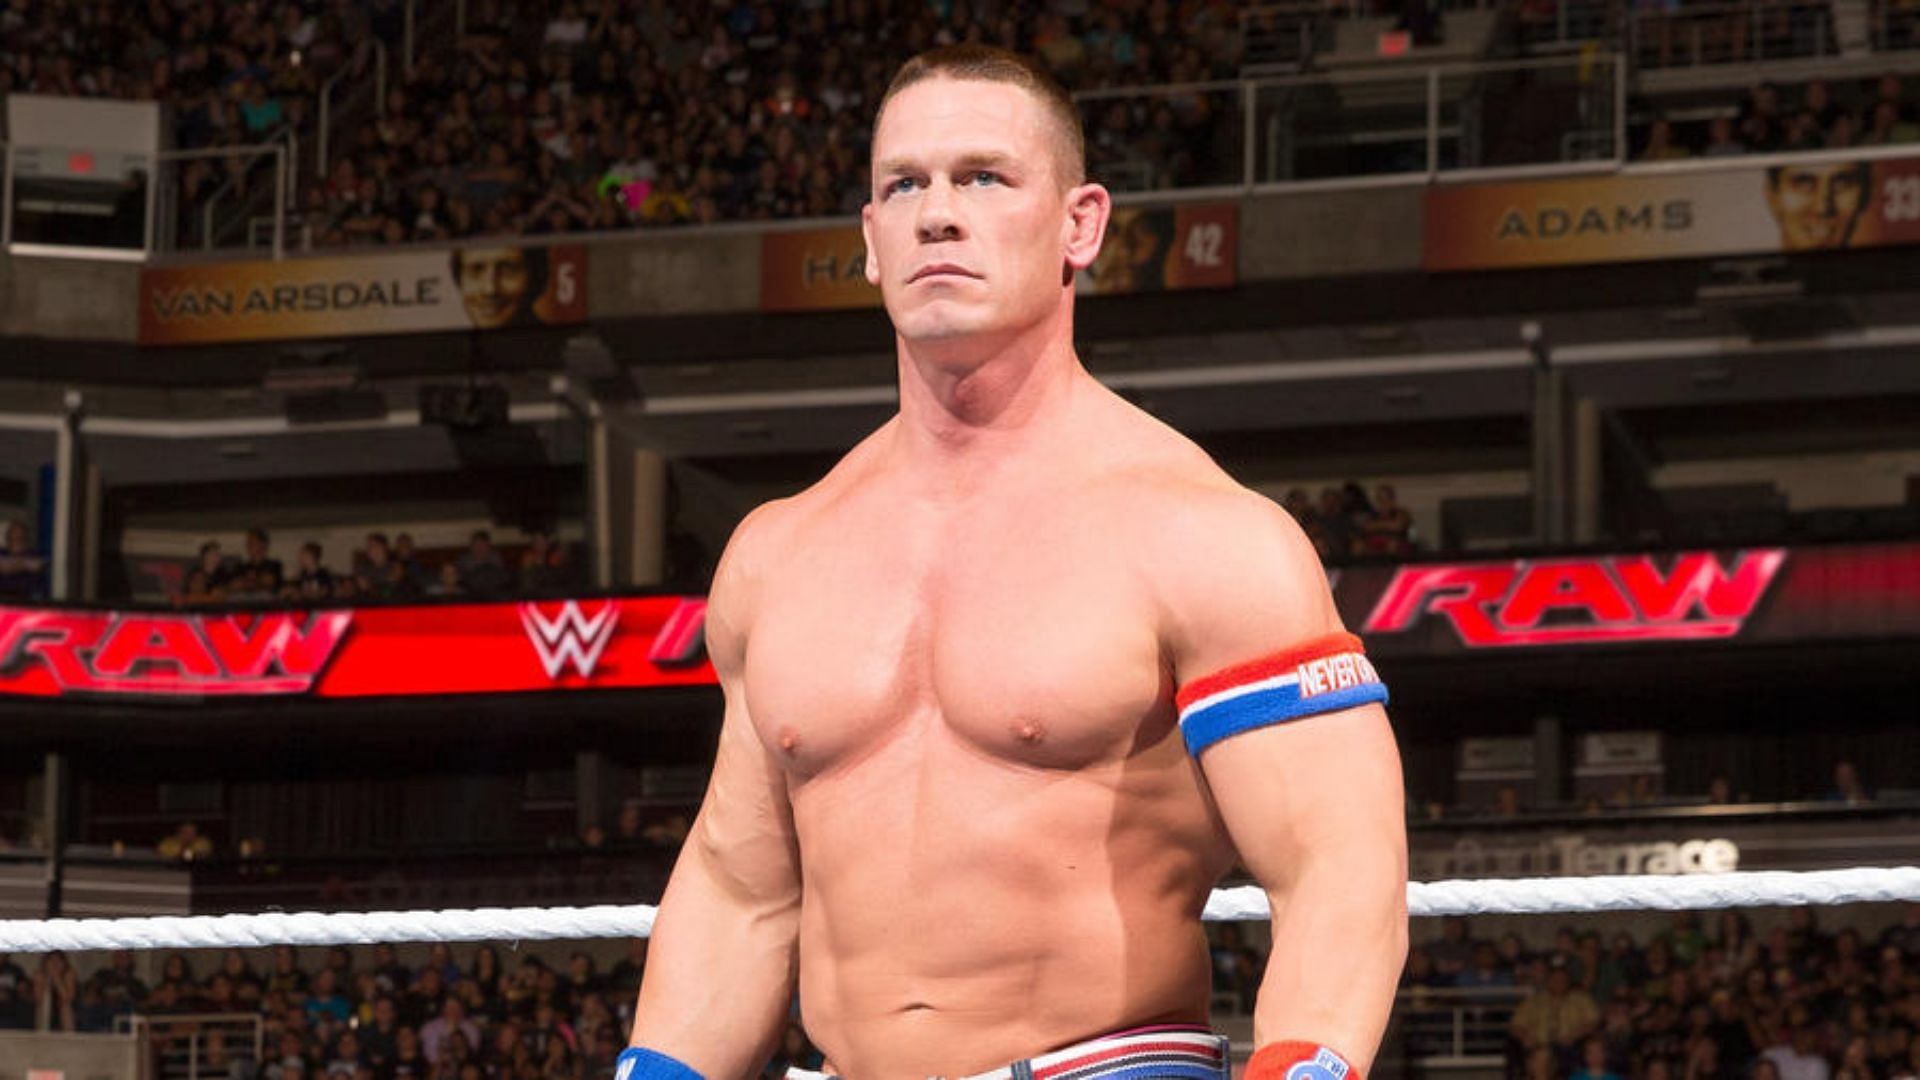 John Cena in the ring. Image Credits: wwe.com 